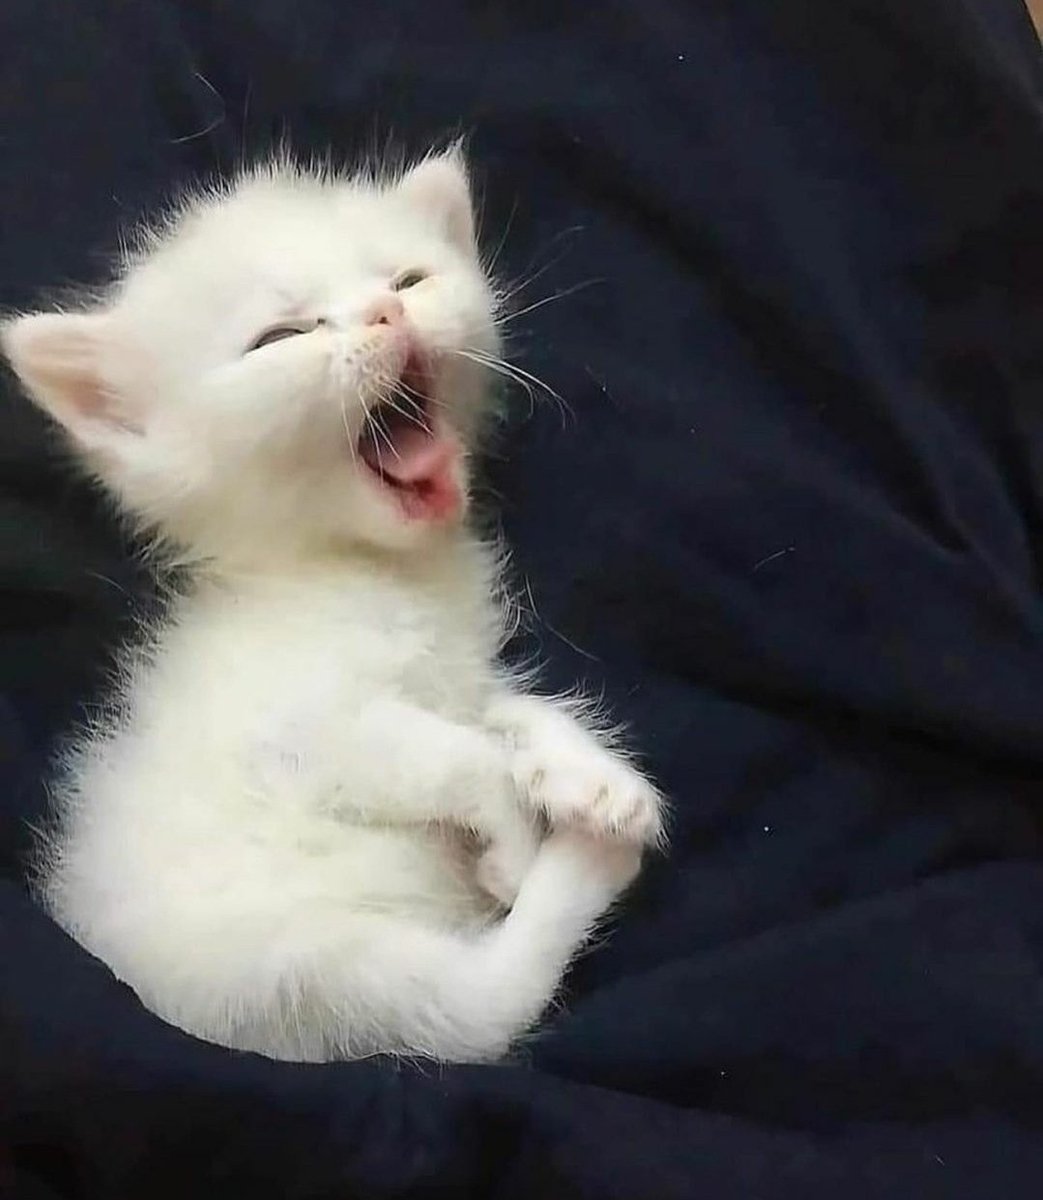 Eepy yawn